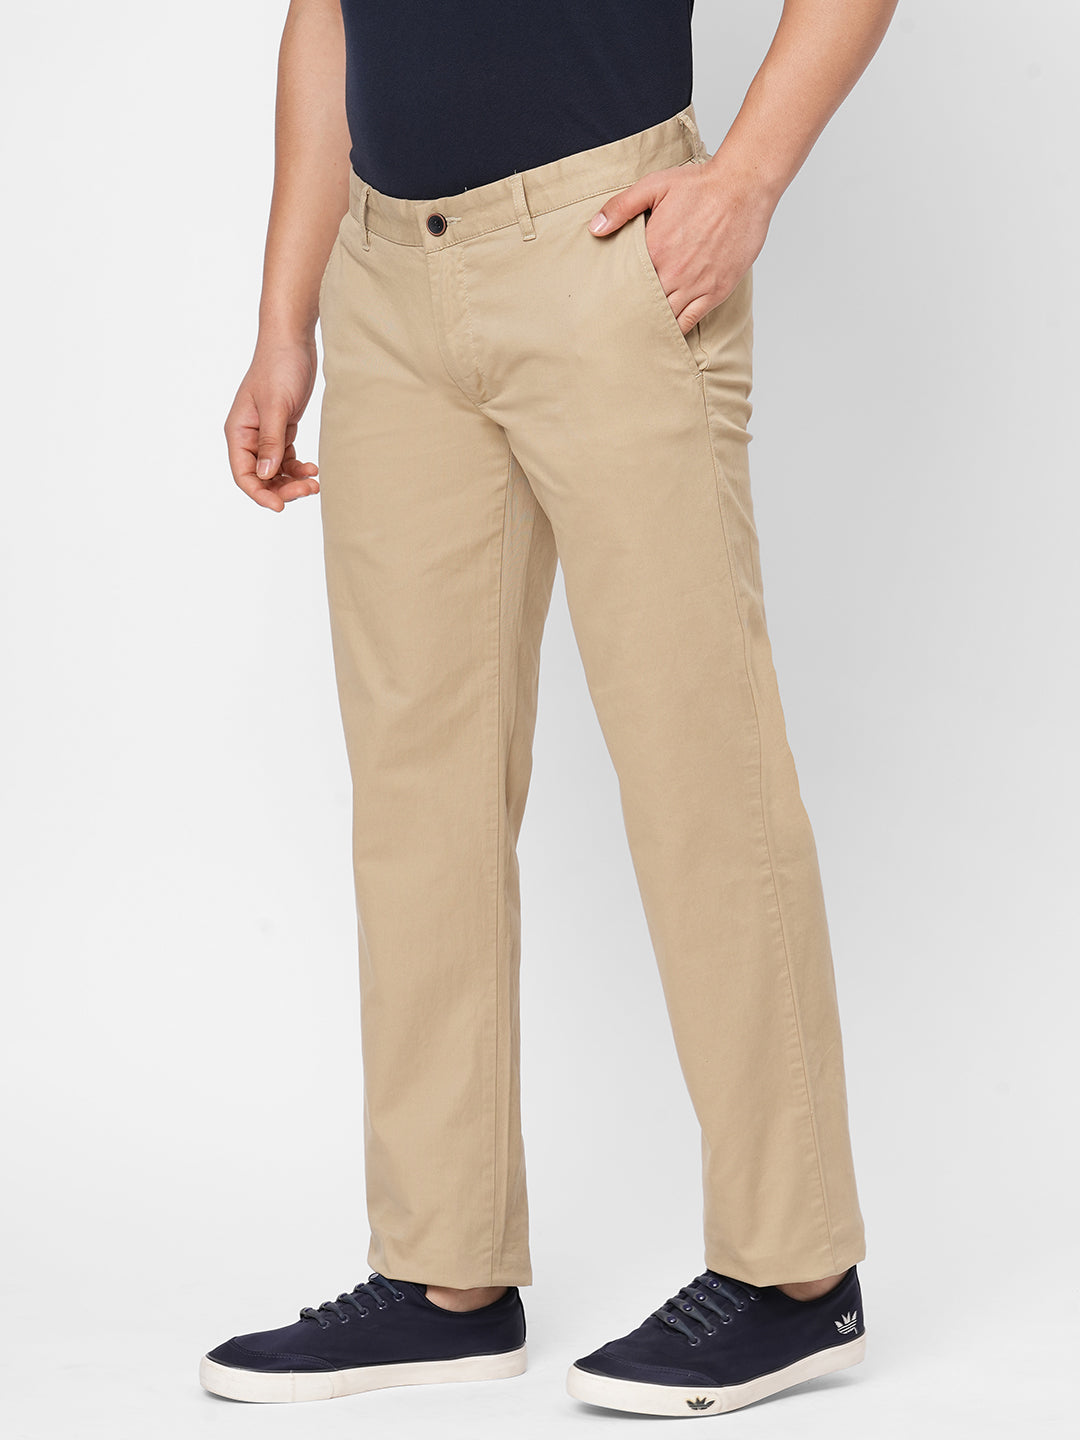 Buy Beige Cotton Slim Fit Formal Trousers online  Looksgudin